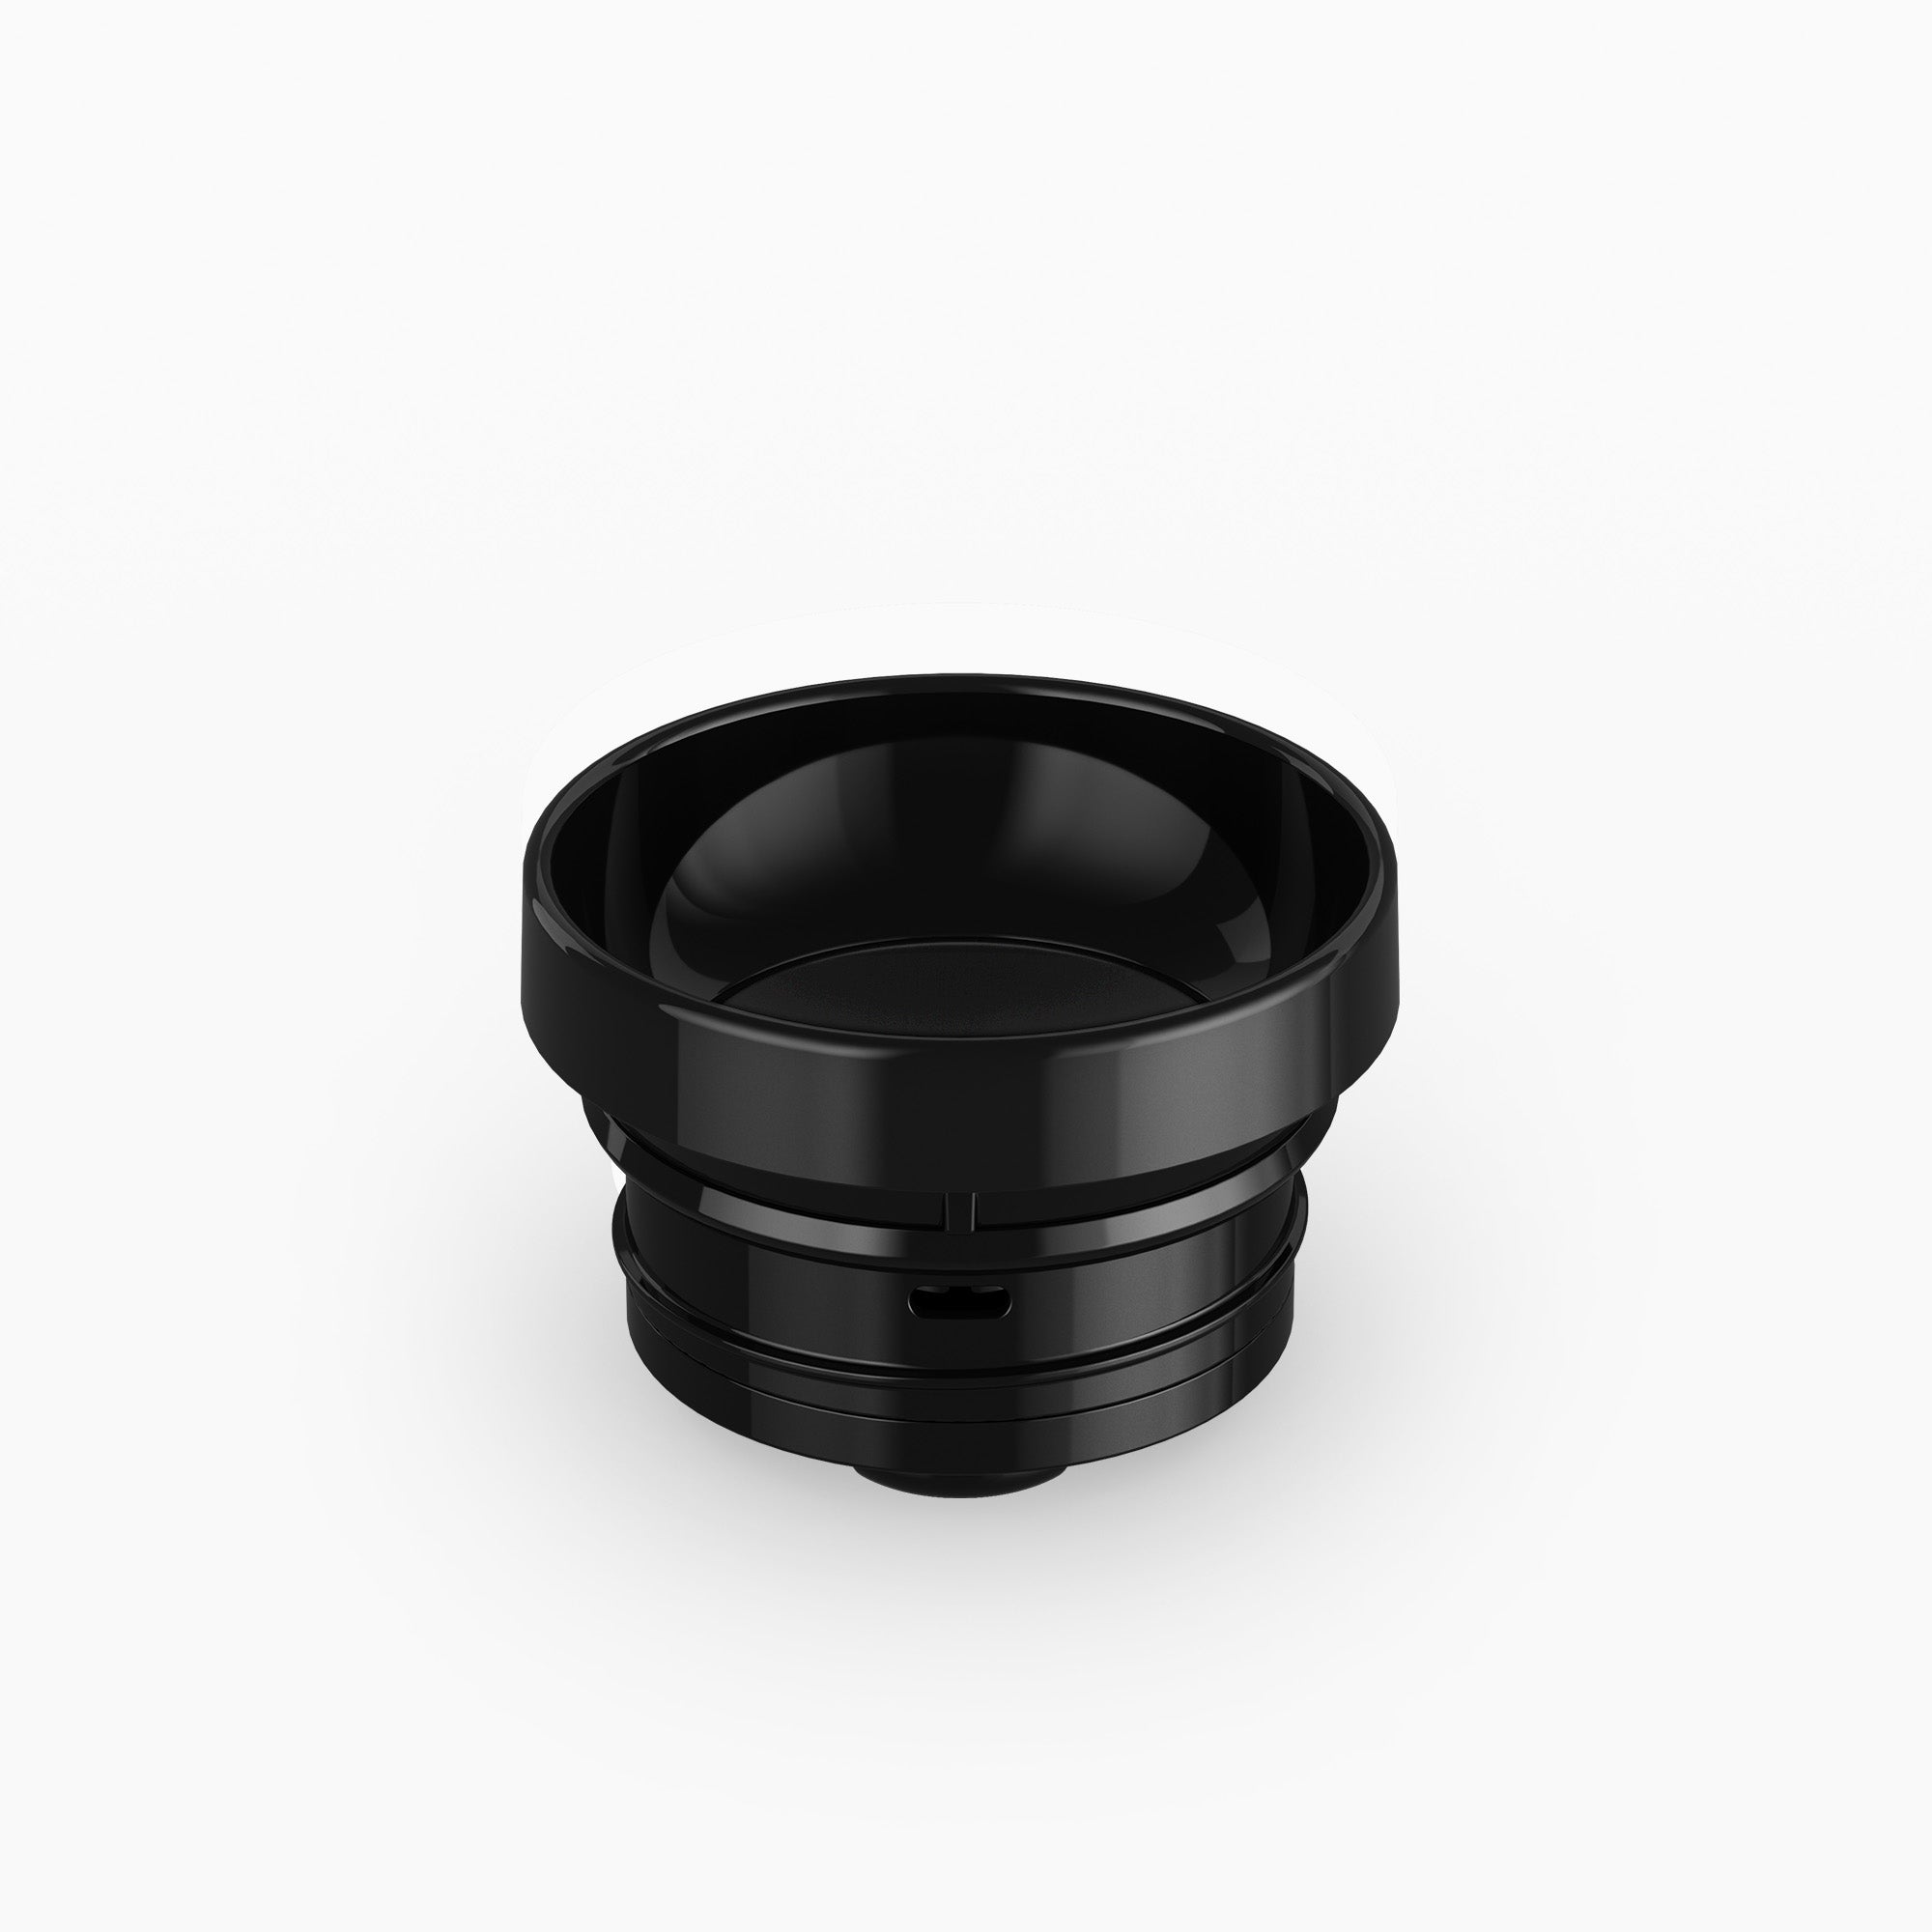 Ember Temperature Control Travel Mug 2 12 oz 355 ml Black NEW IN BOX